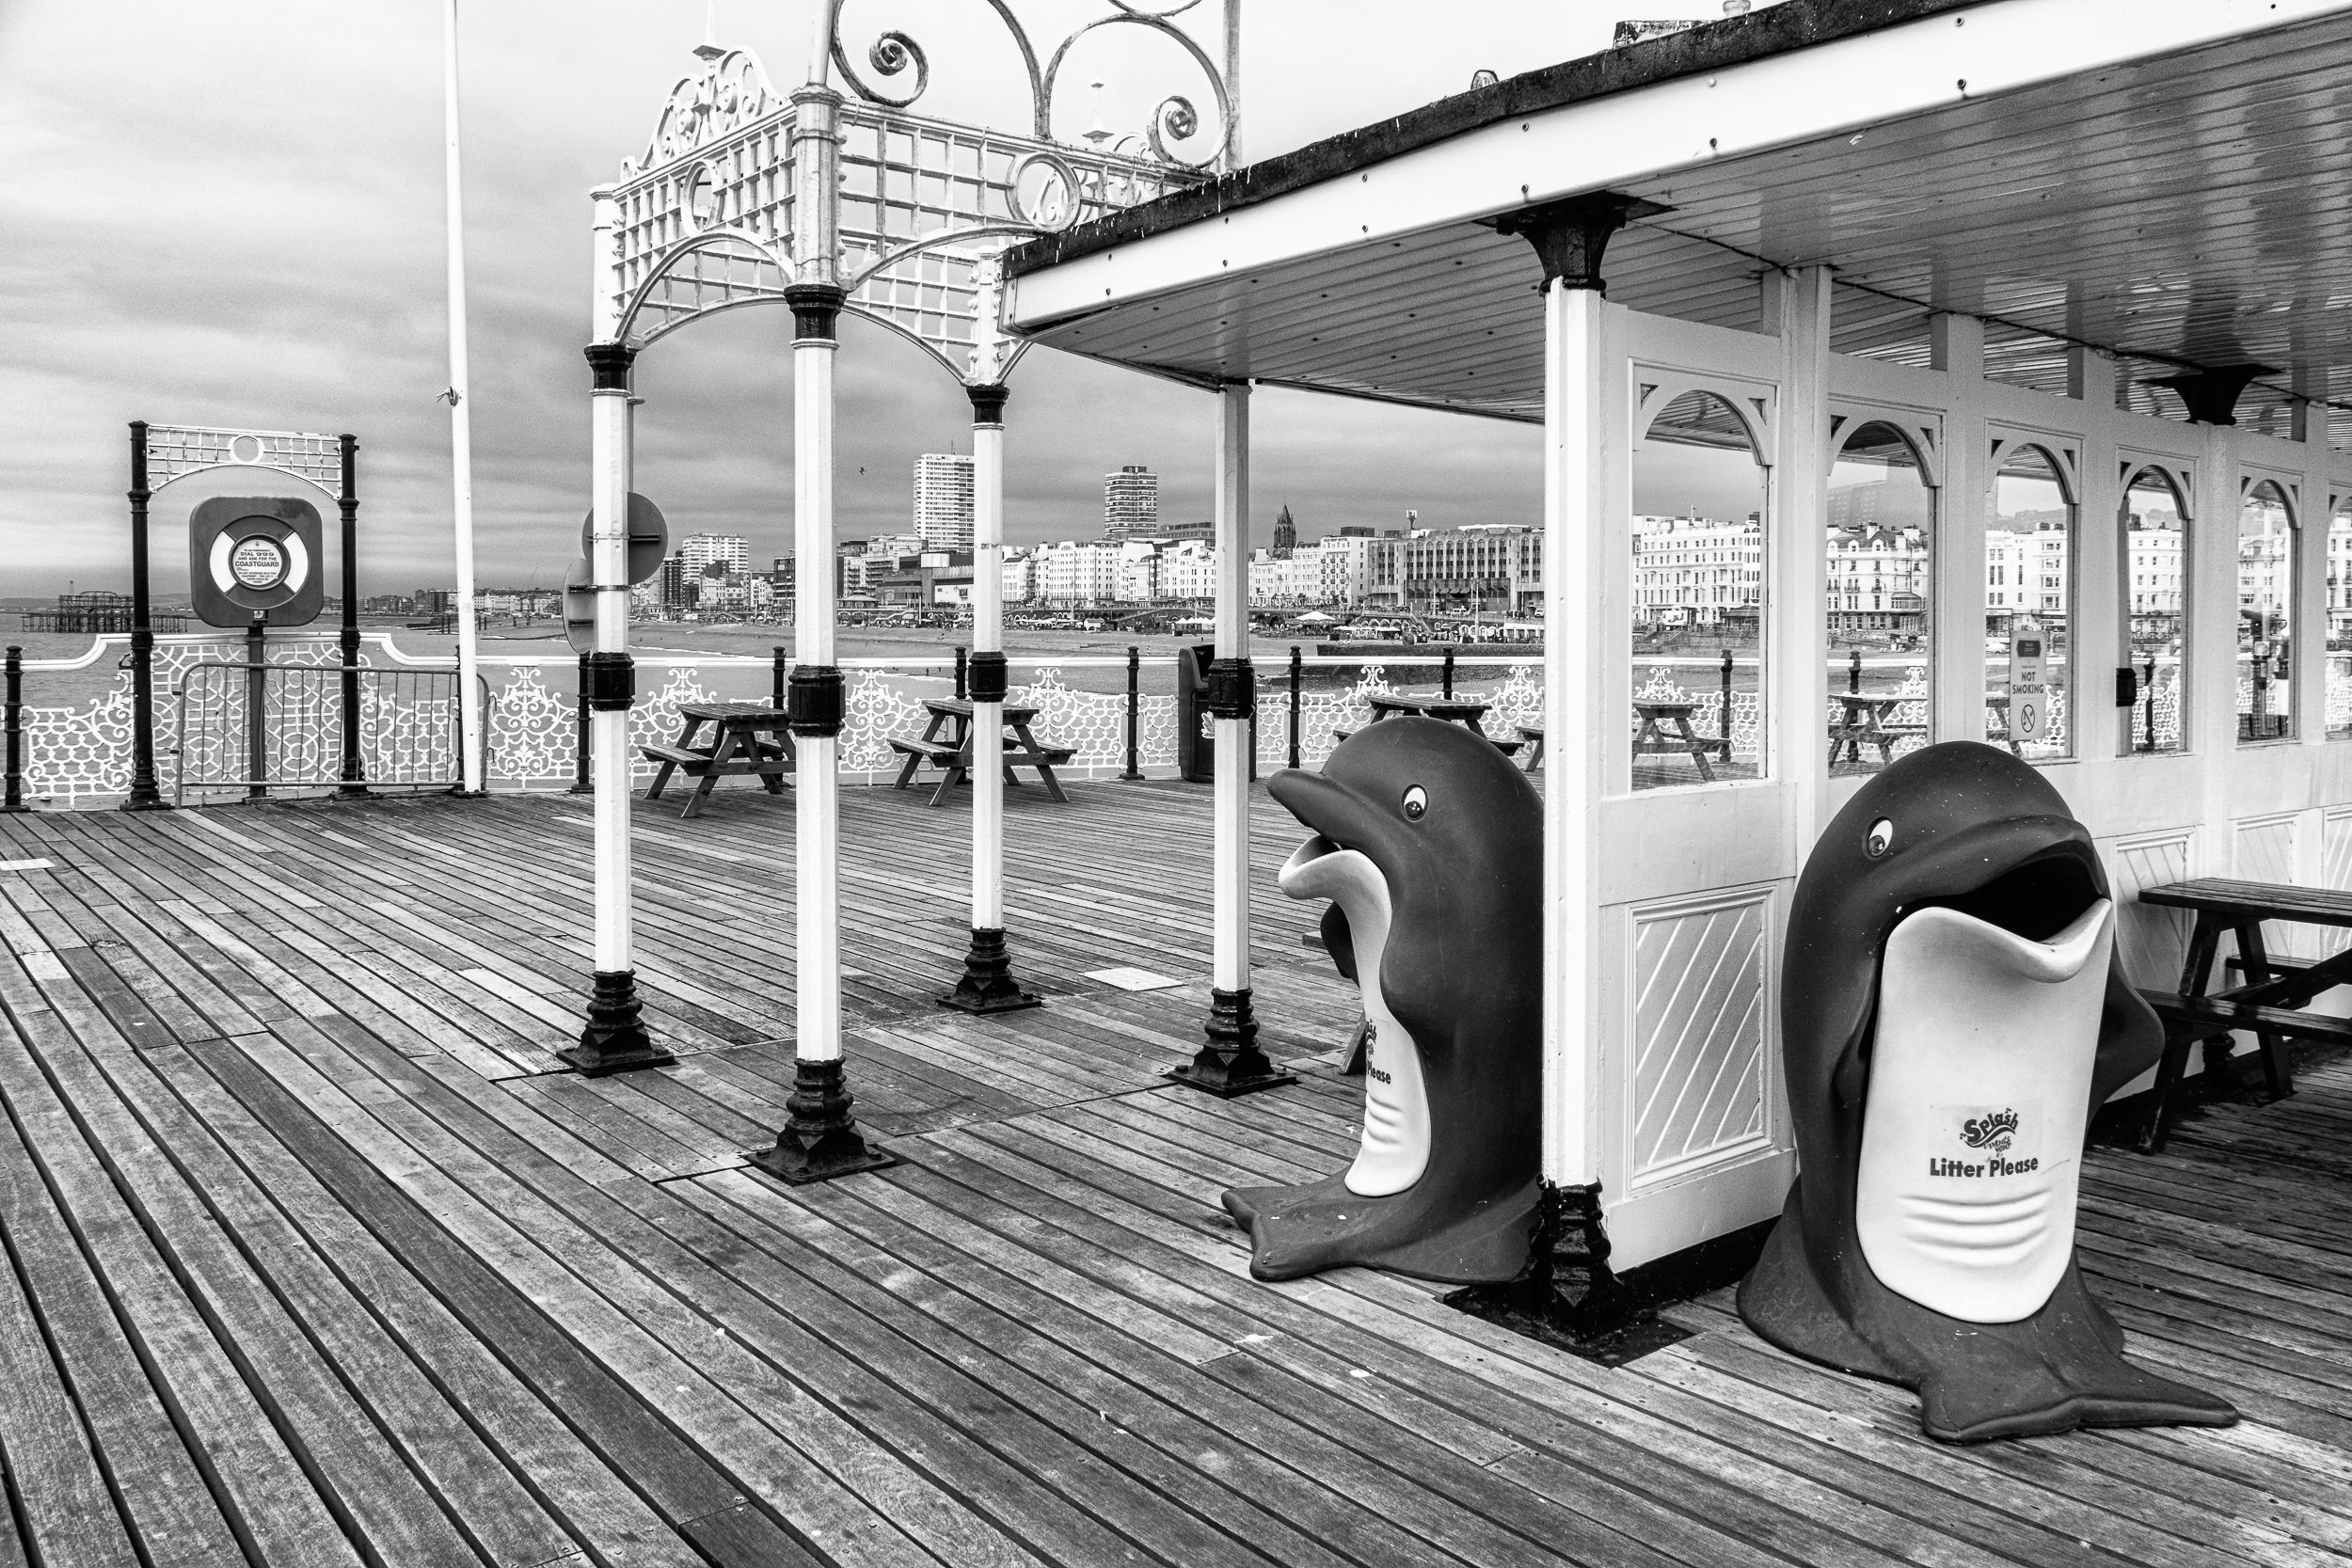 On Brighton Pier